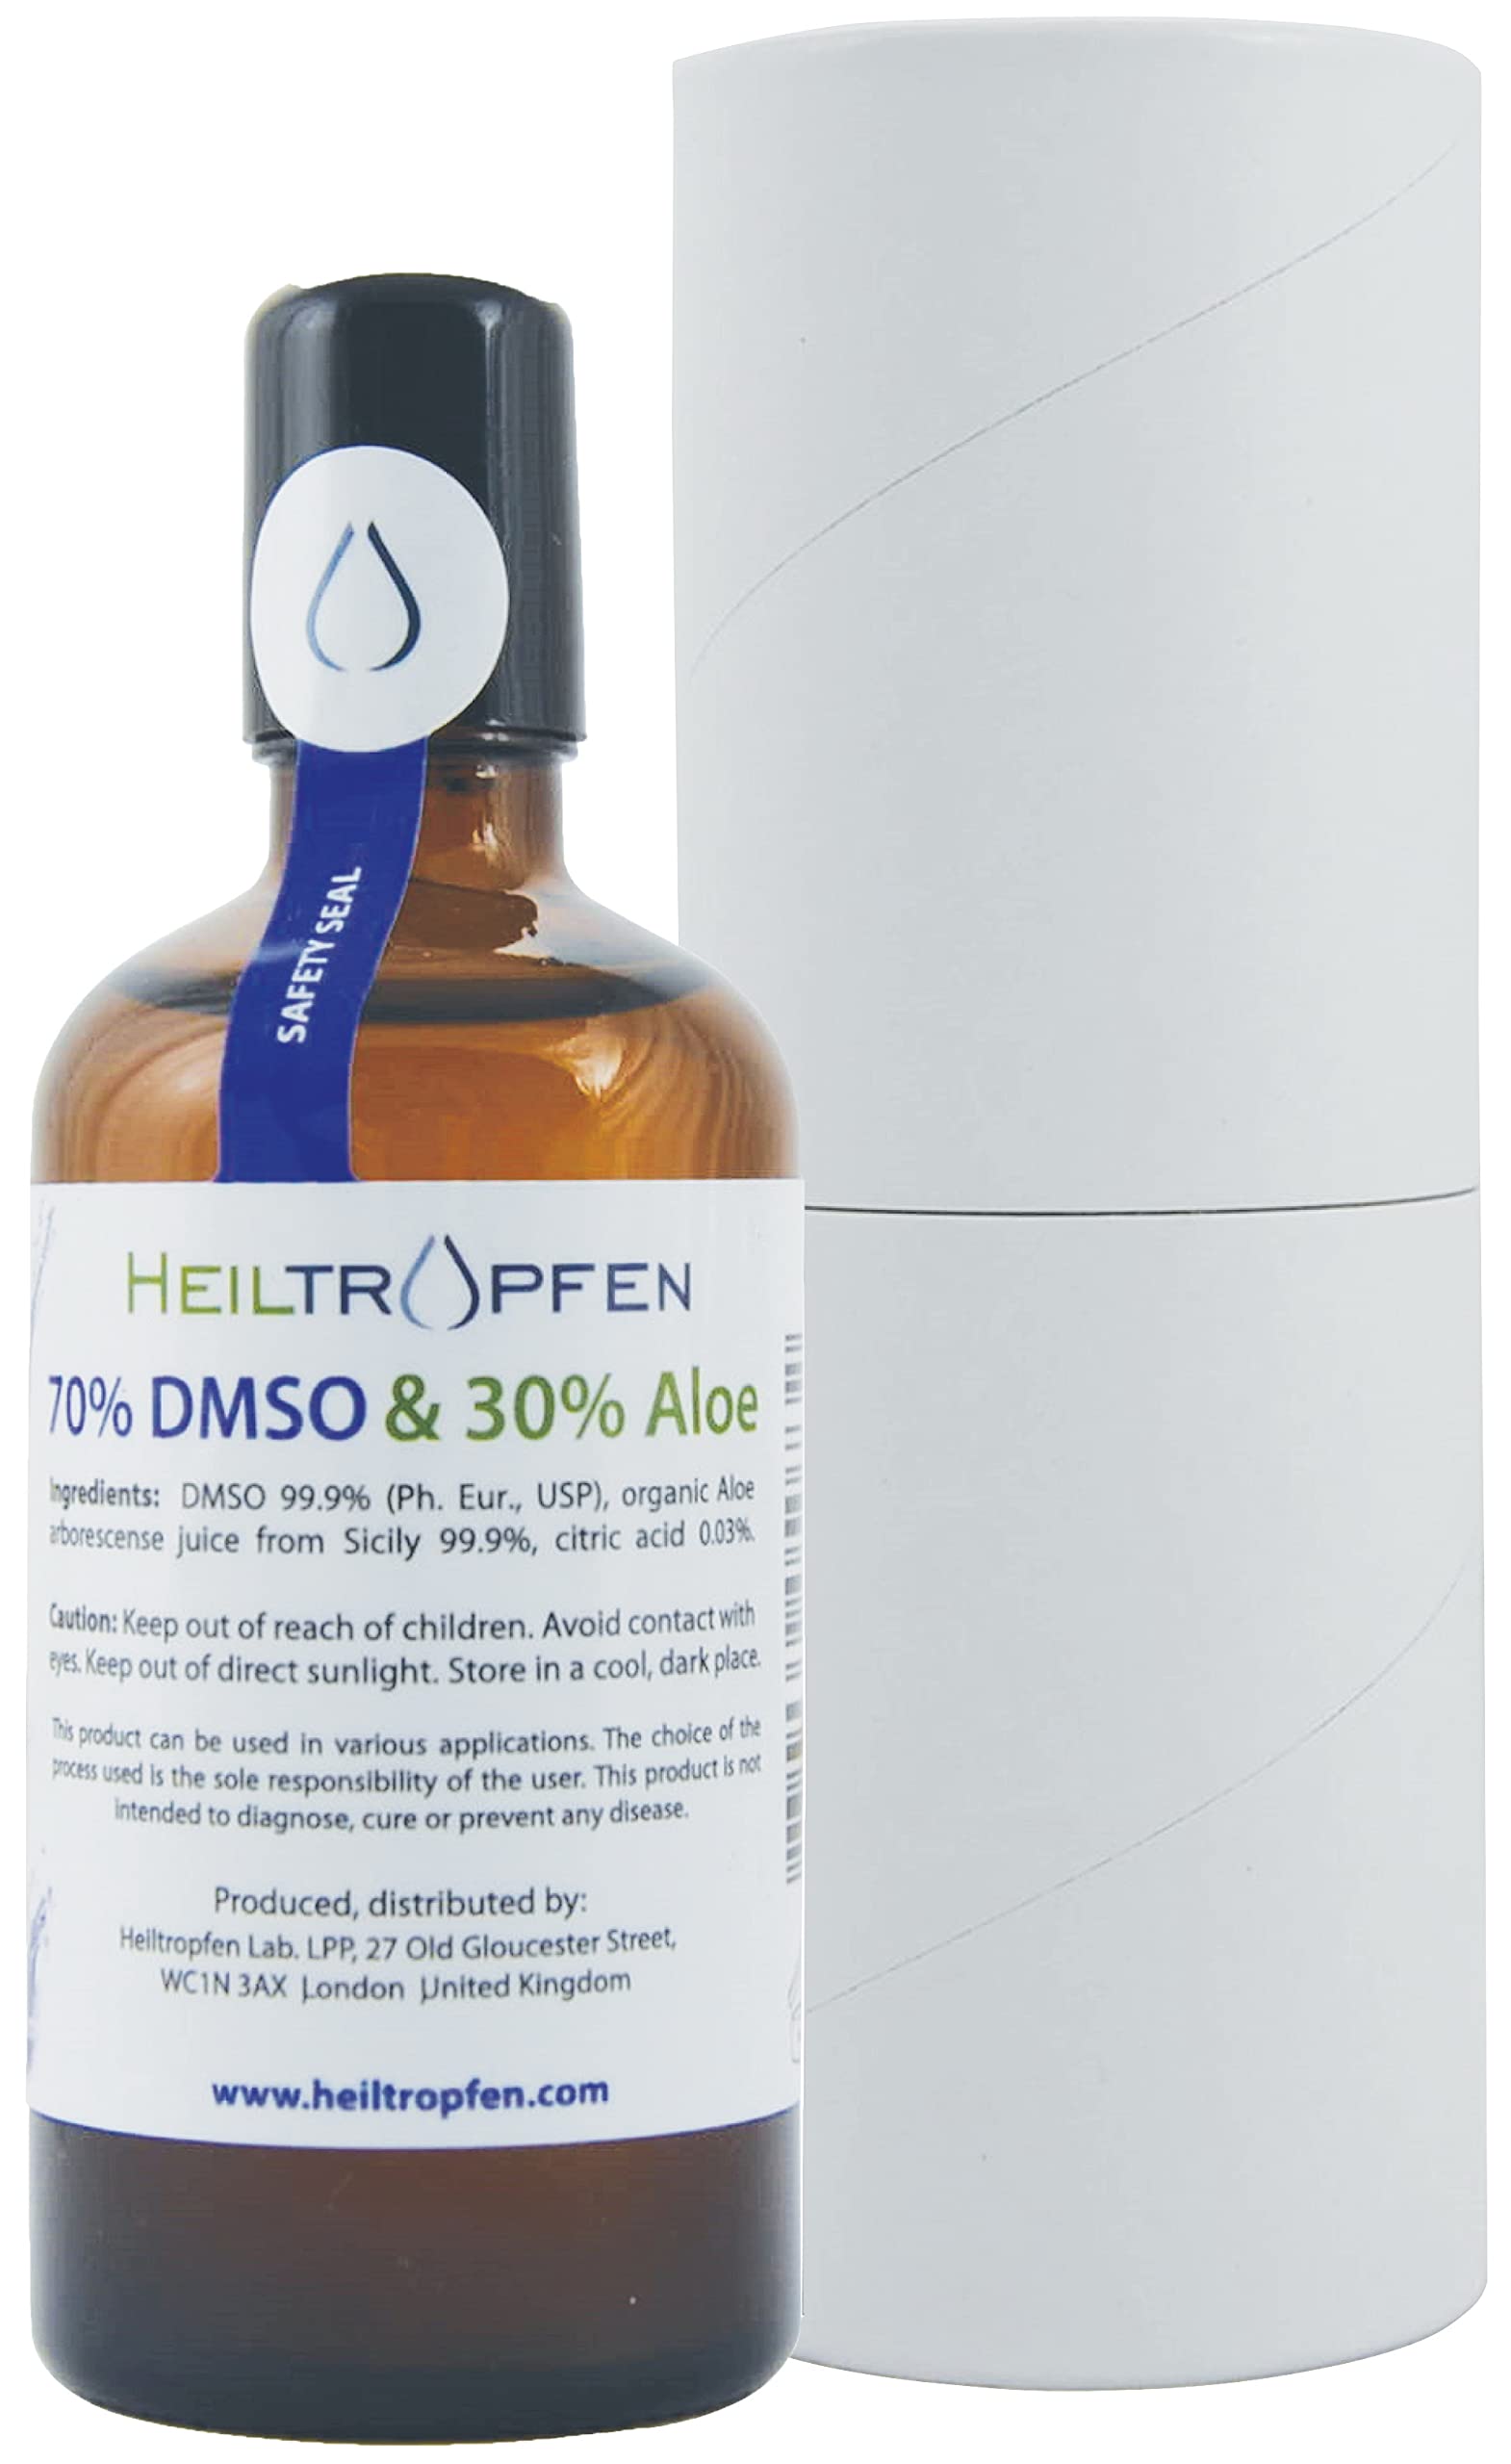 DMSO - NO ODOUR - Dimethyl sulfoxide liquid (3.4 Oz - 100ml)